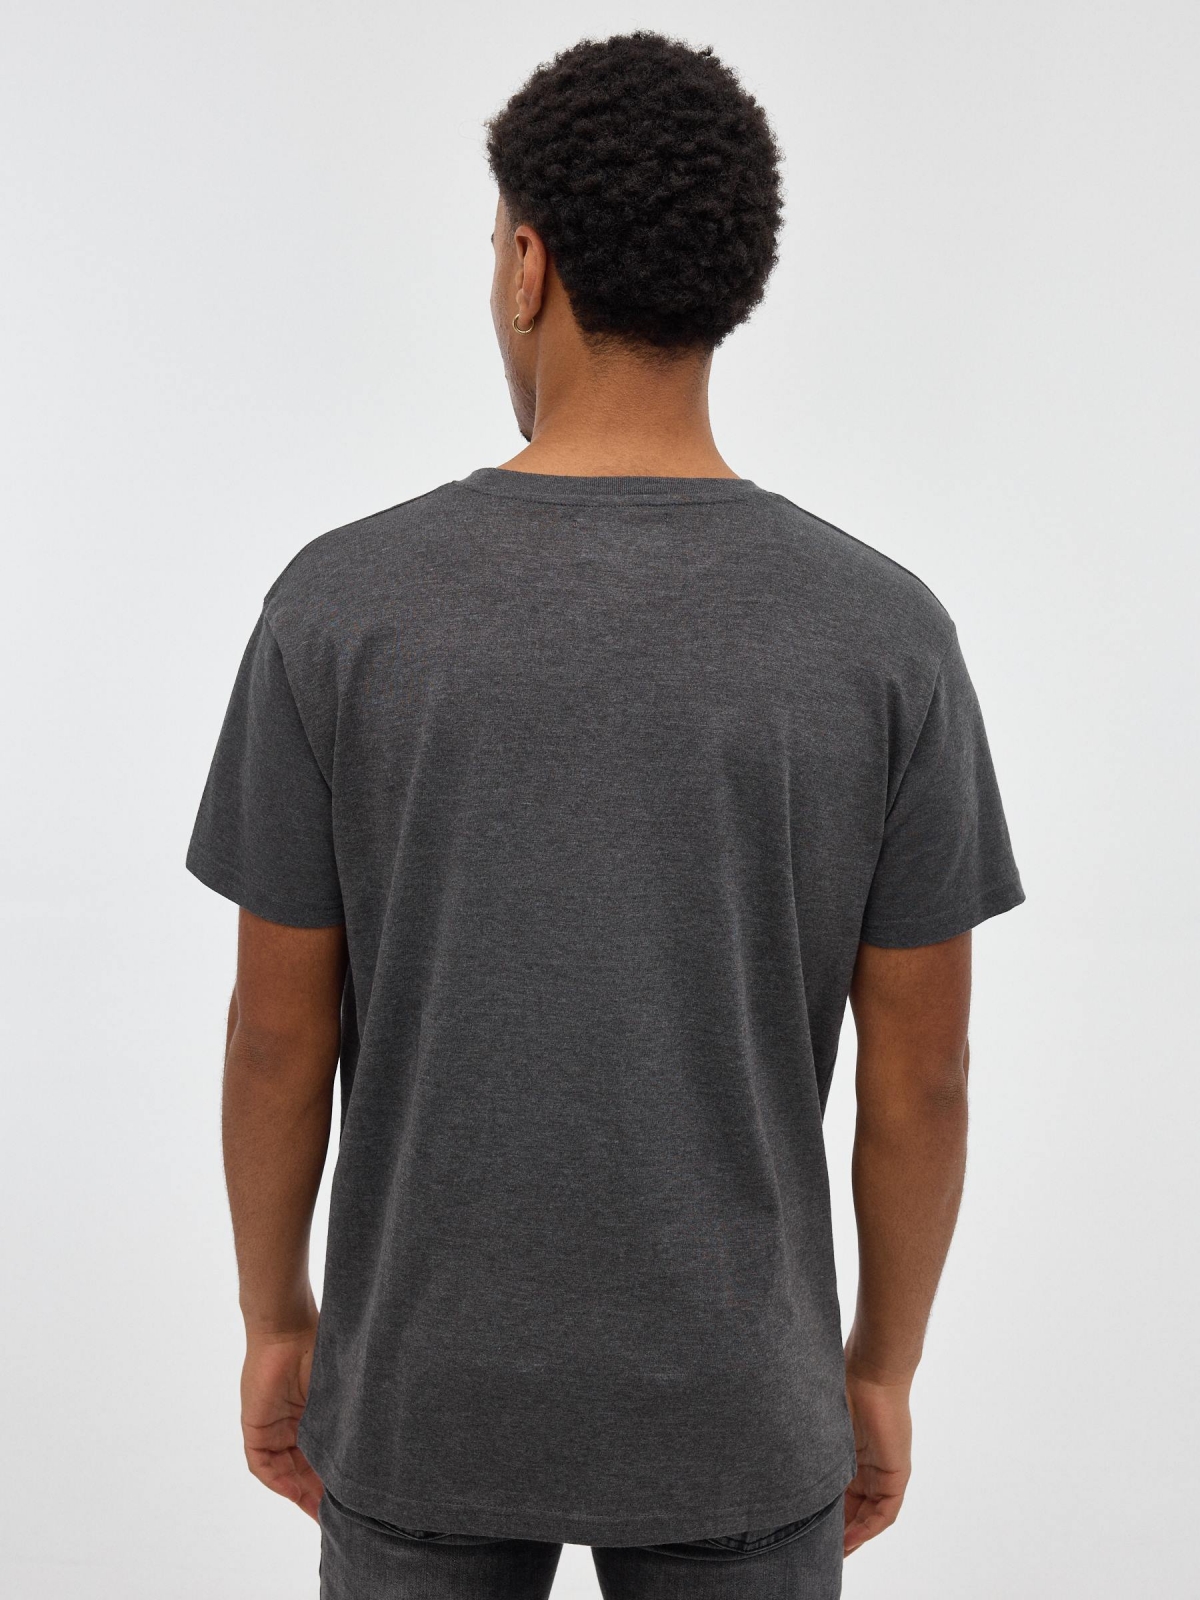 Camiseta estampado metaverso gris oscuro vista media trasera